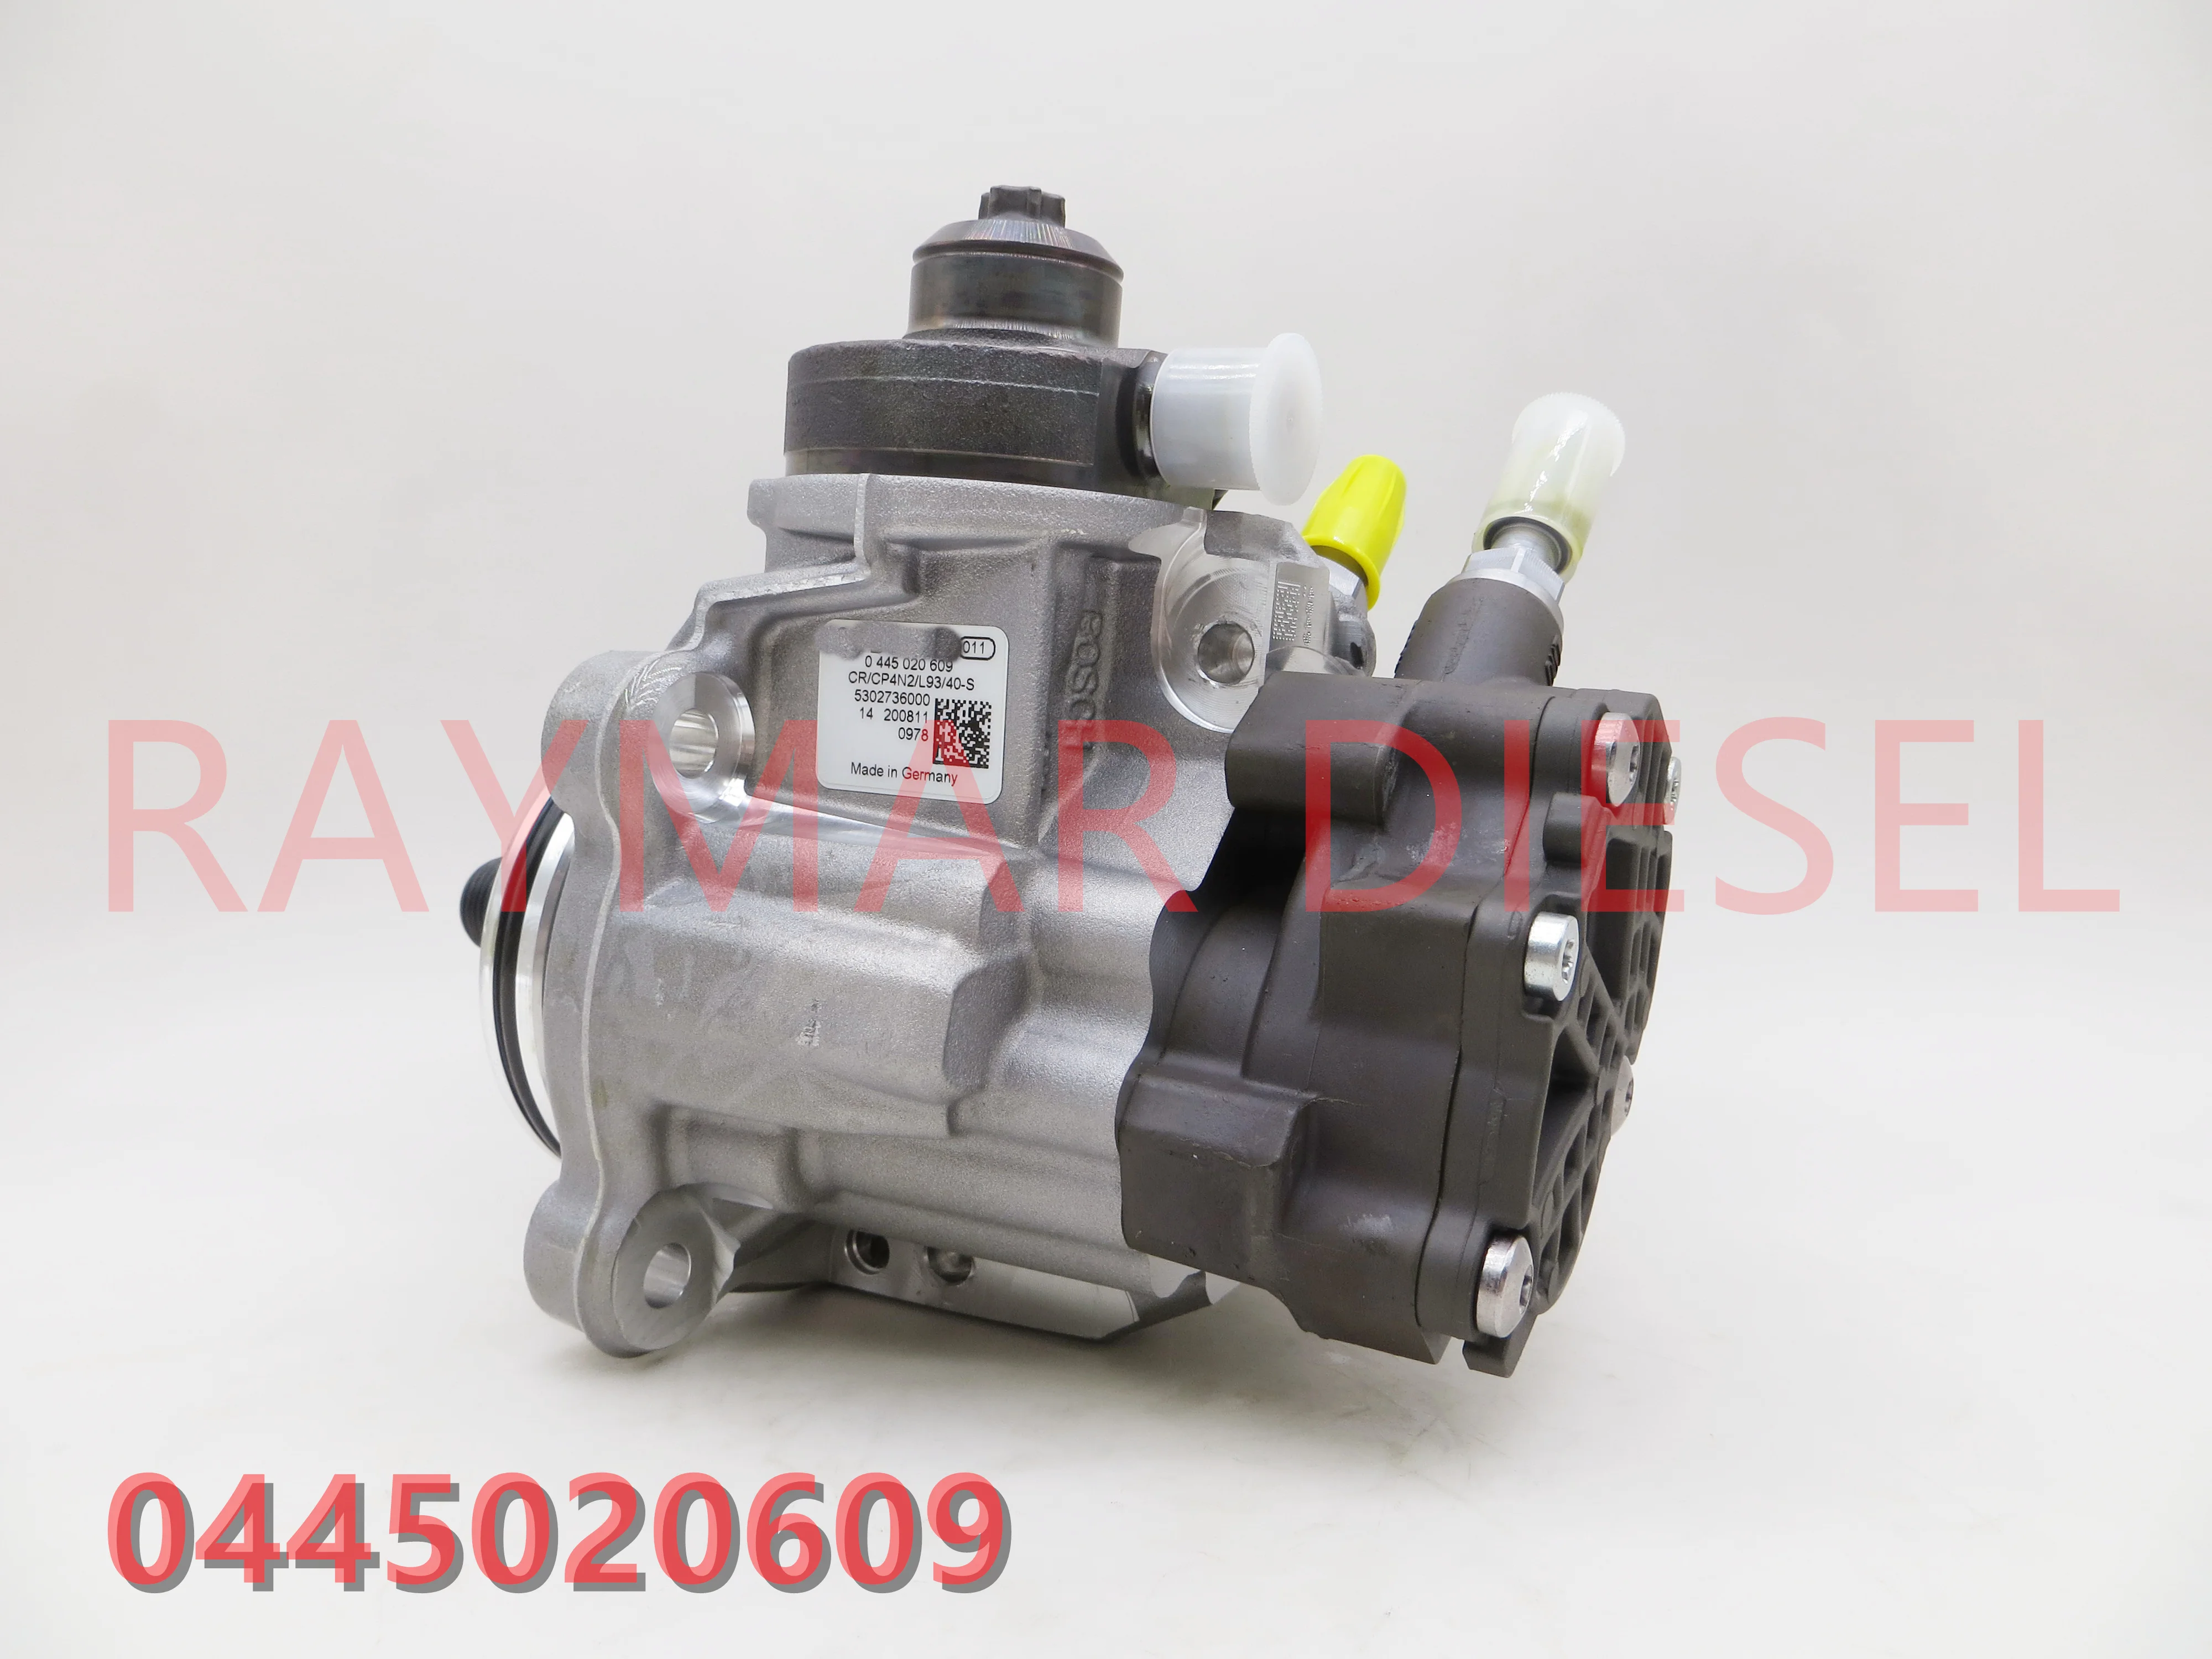 

Genuine Diesel Brand New Fuel Pump 0445020609, 5302736, 5302736000